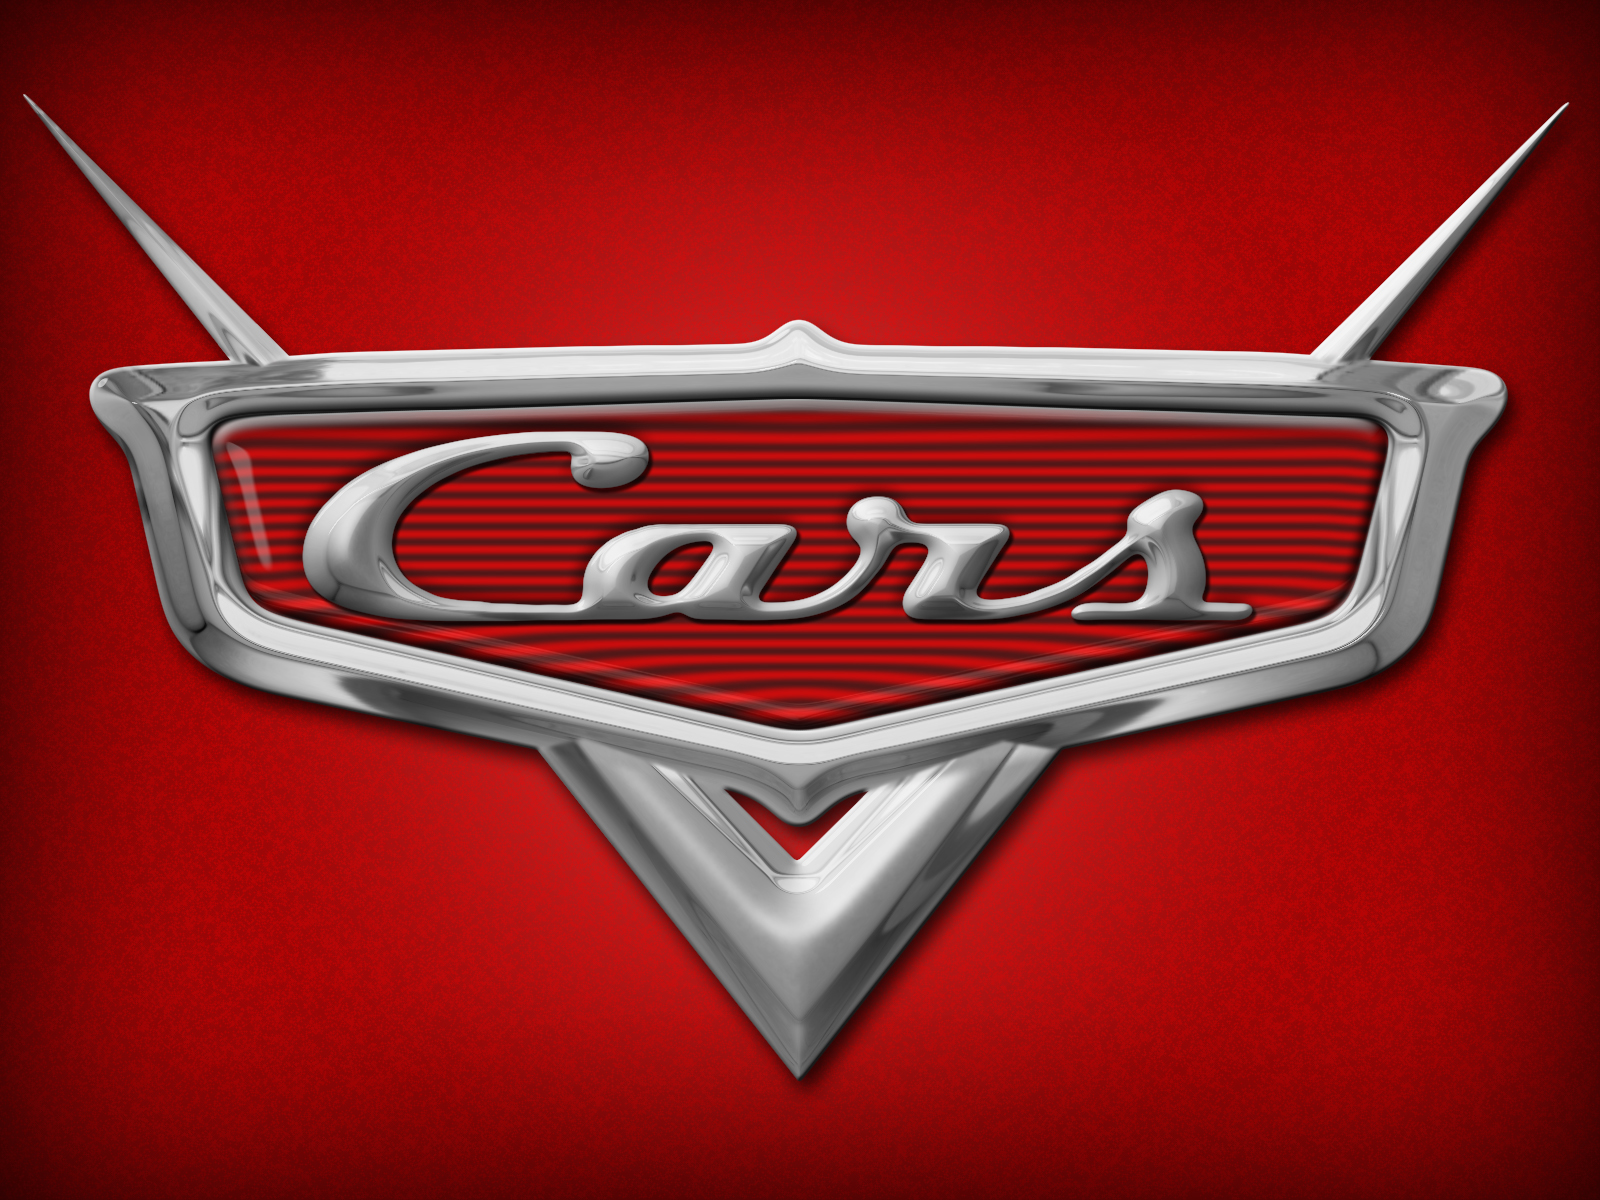 13 Cars Logo Font Images Disney Pixar Cars Logo, Disney Cars Logo and